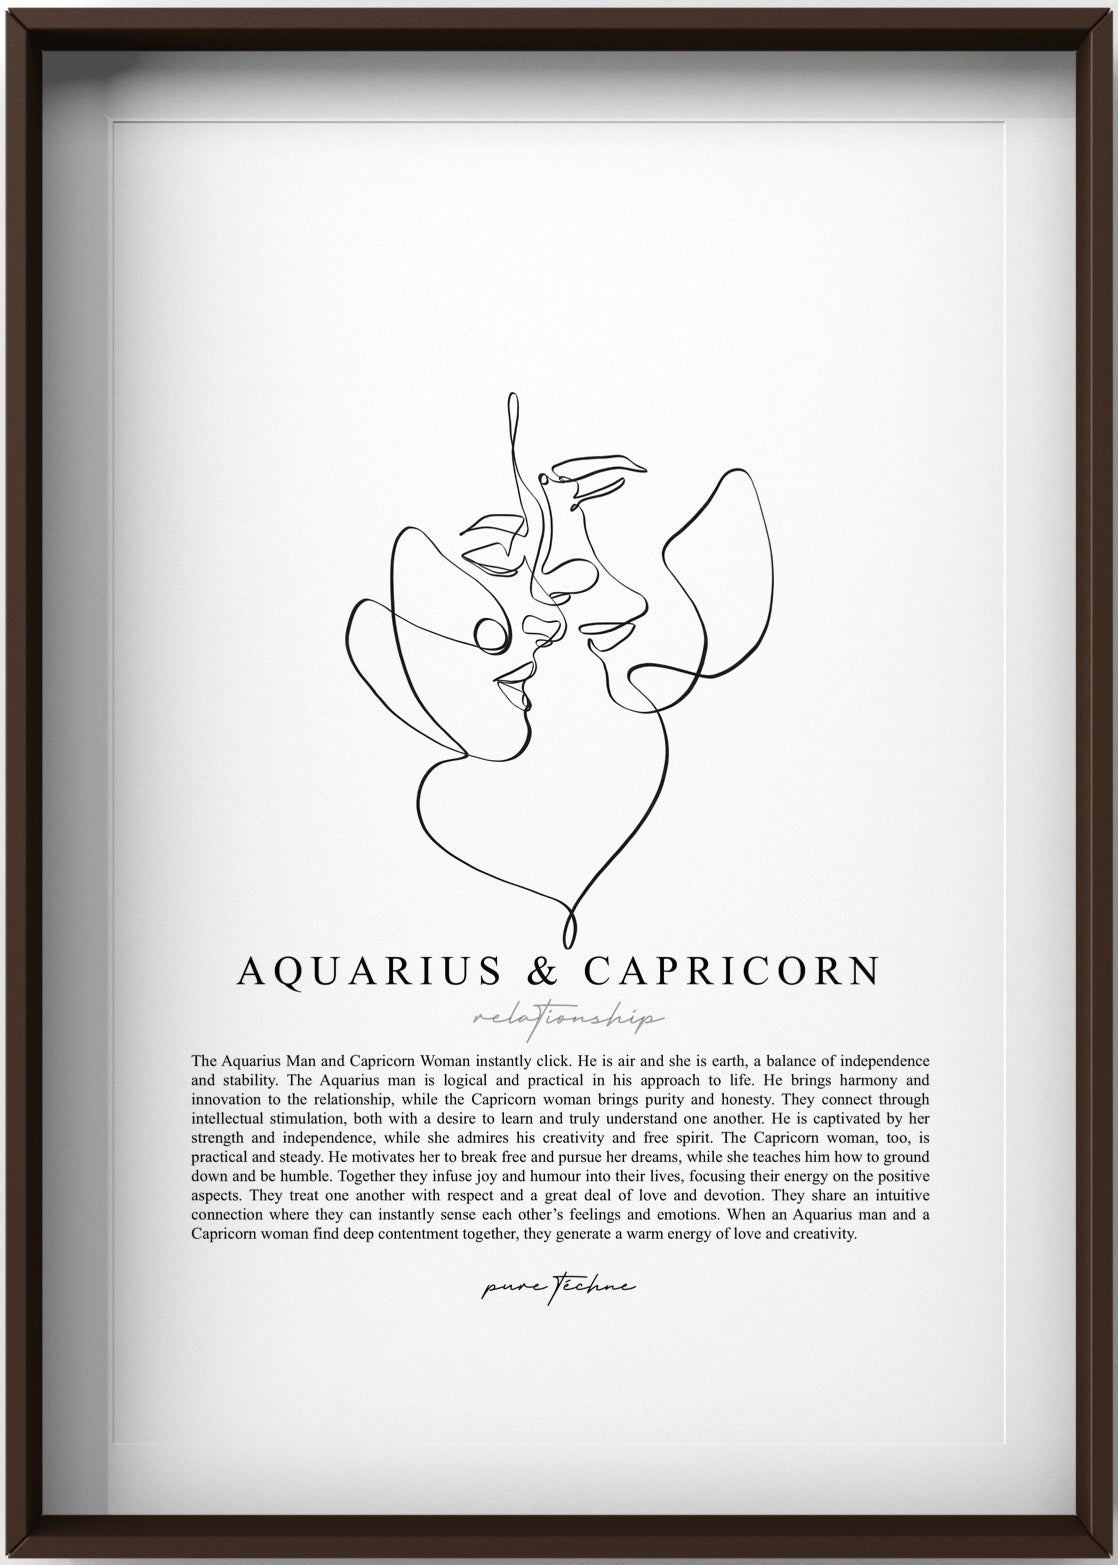 Aquarius Man & Capricorn Woman